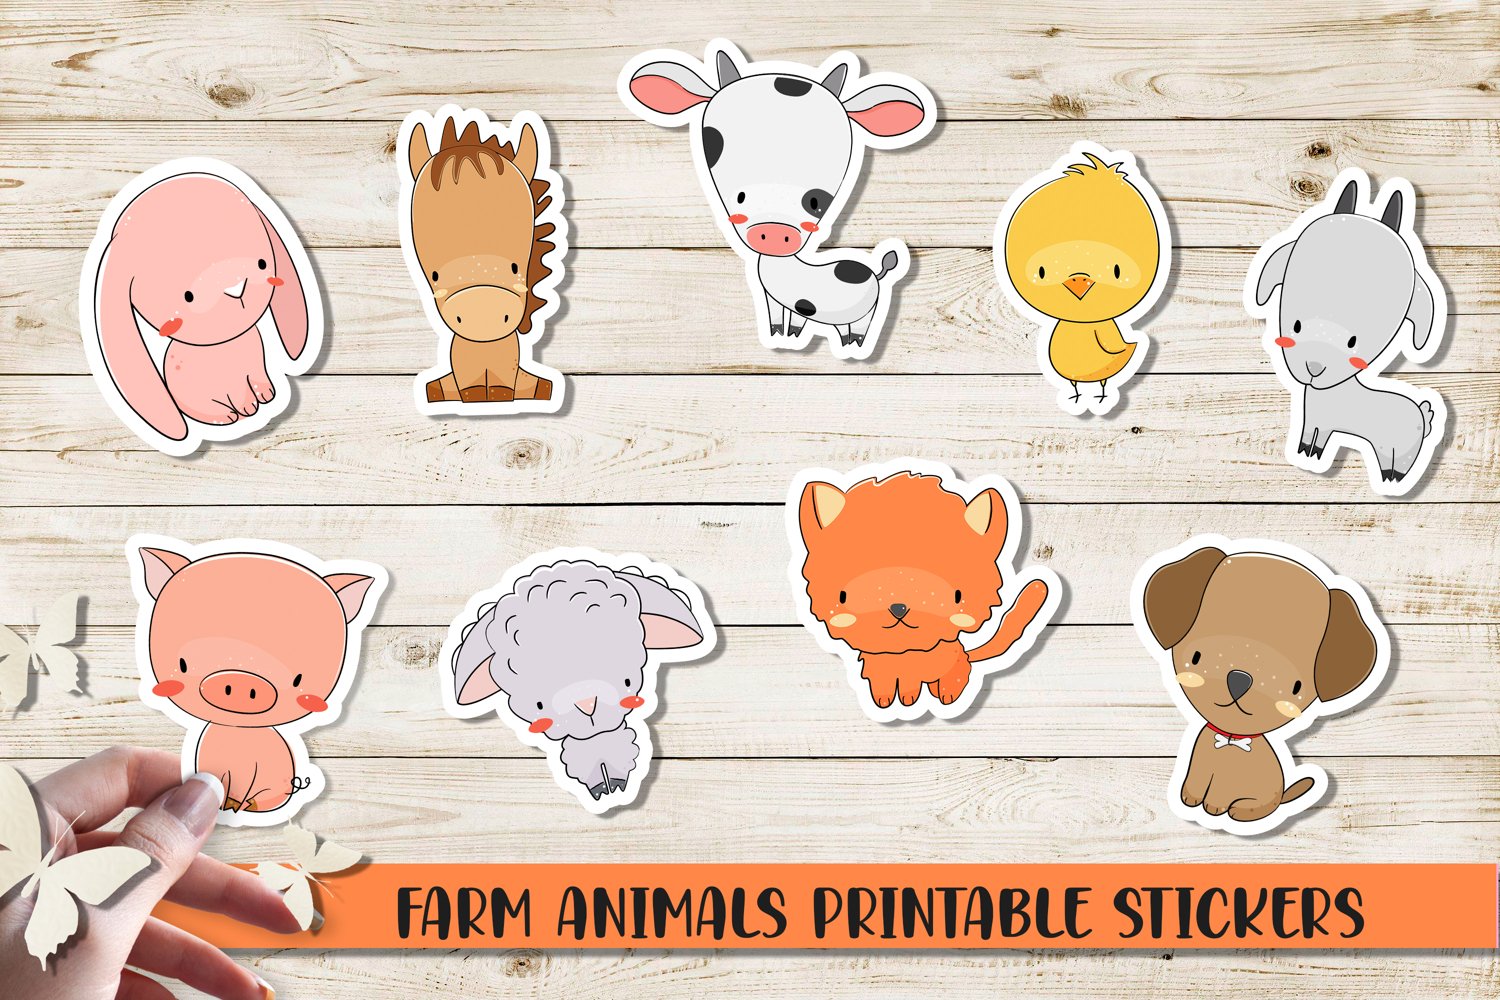 Farm animals printable stickers.